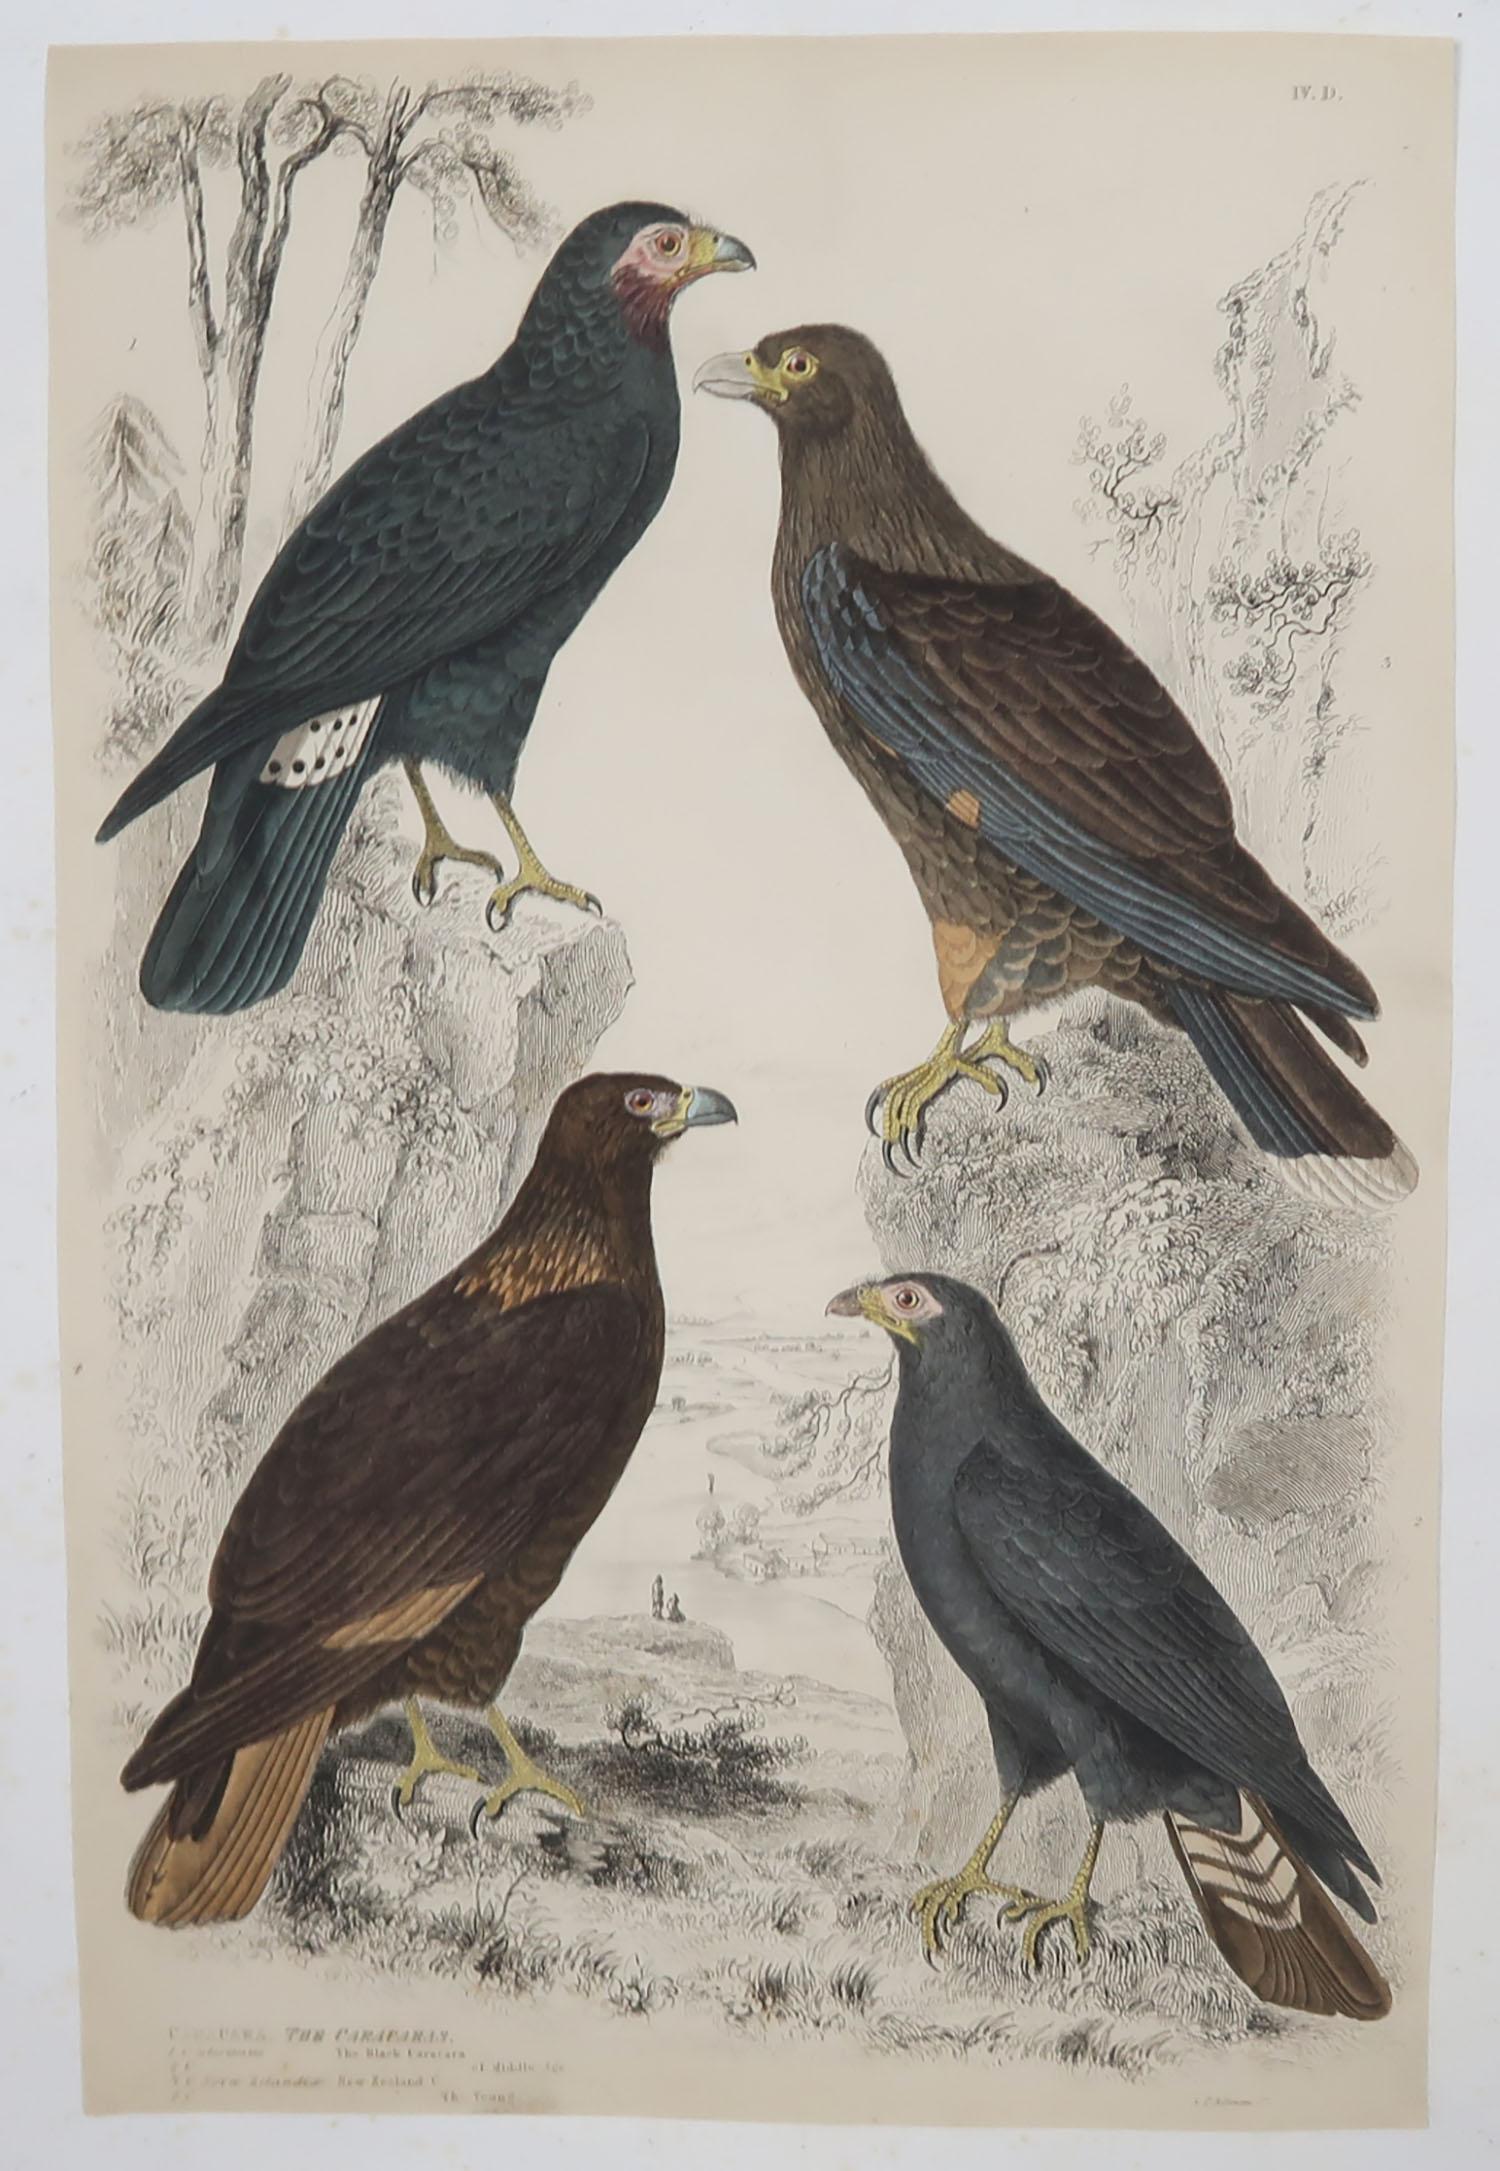 Other Set of 6 Original Antique Prints of Birds of Prey, 1830s